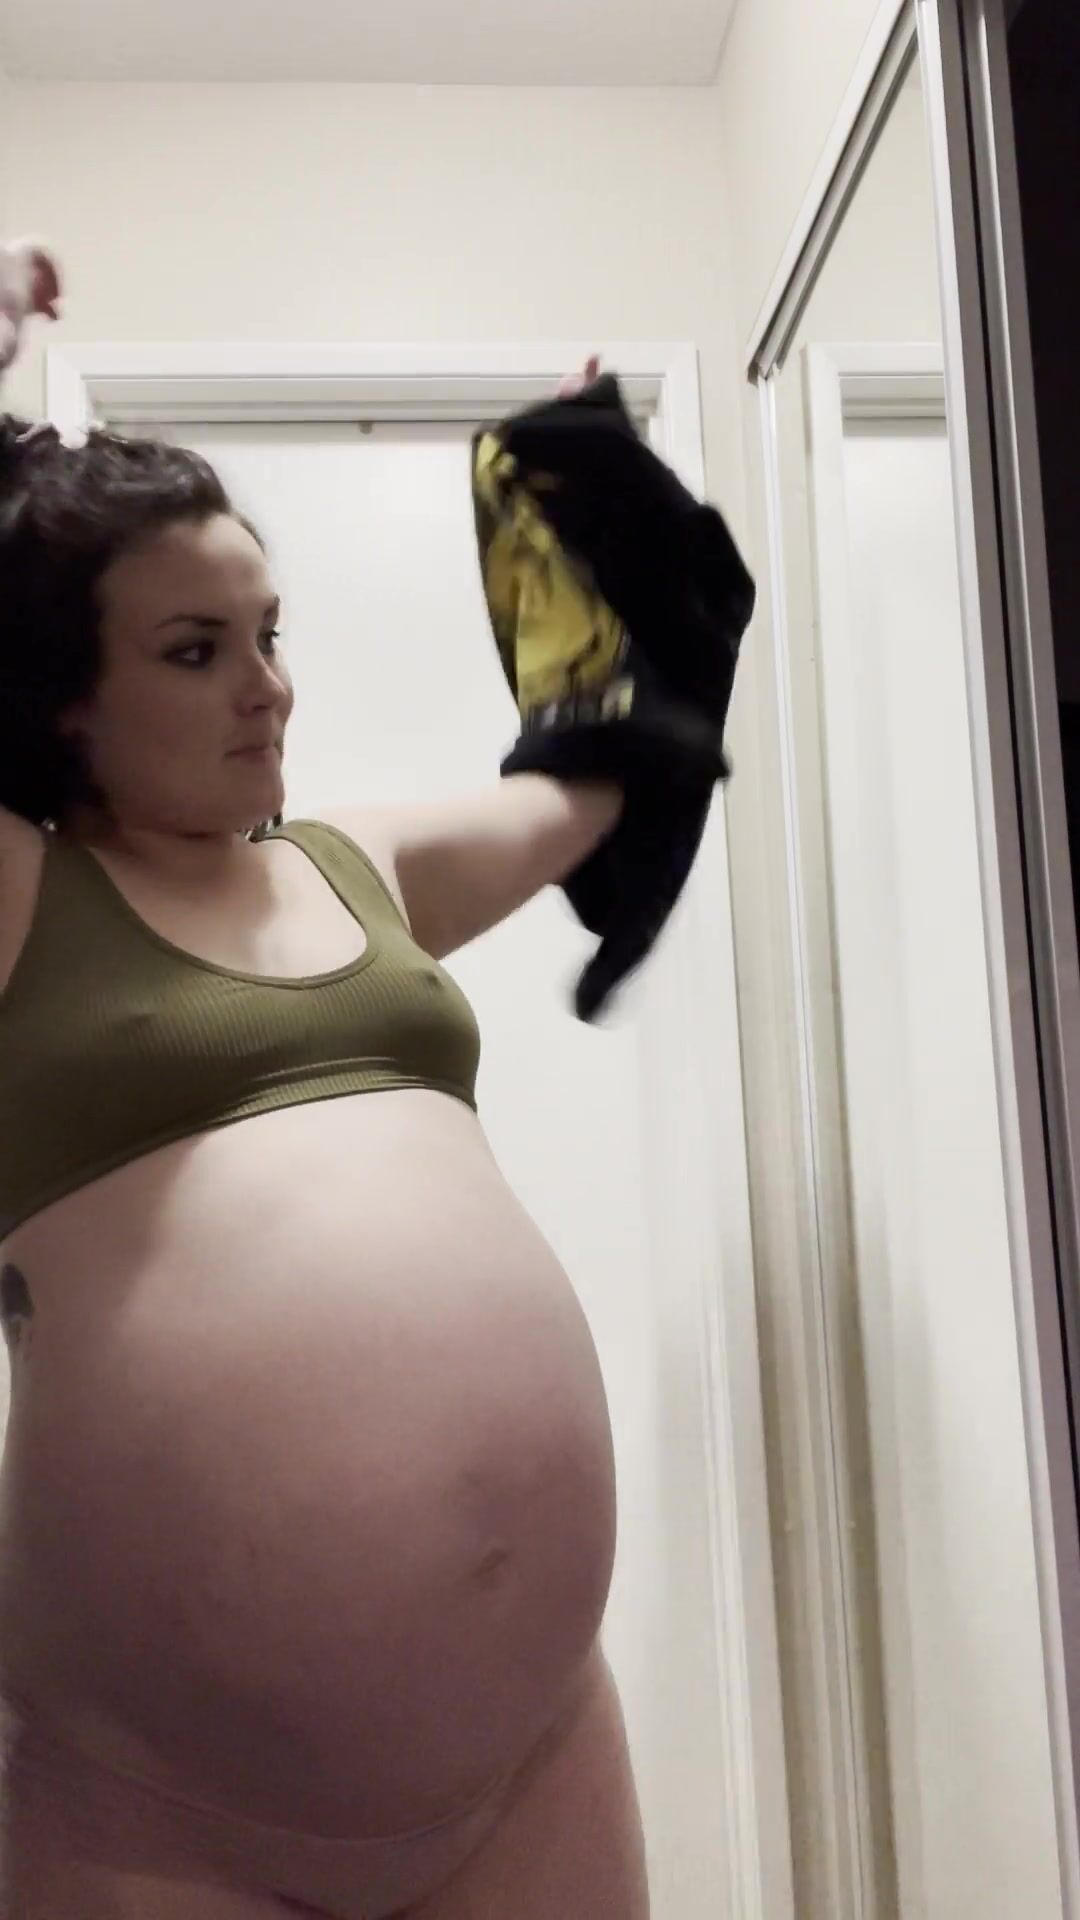 VioletRainnn- 39 weeks trying on pre-pregnancy clothes